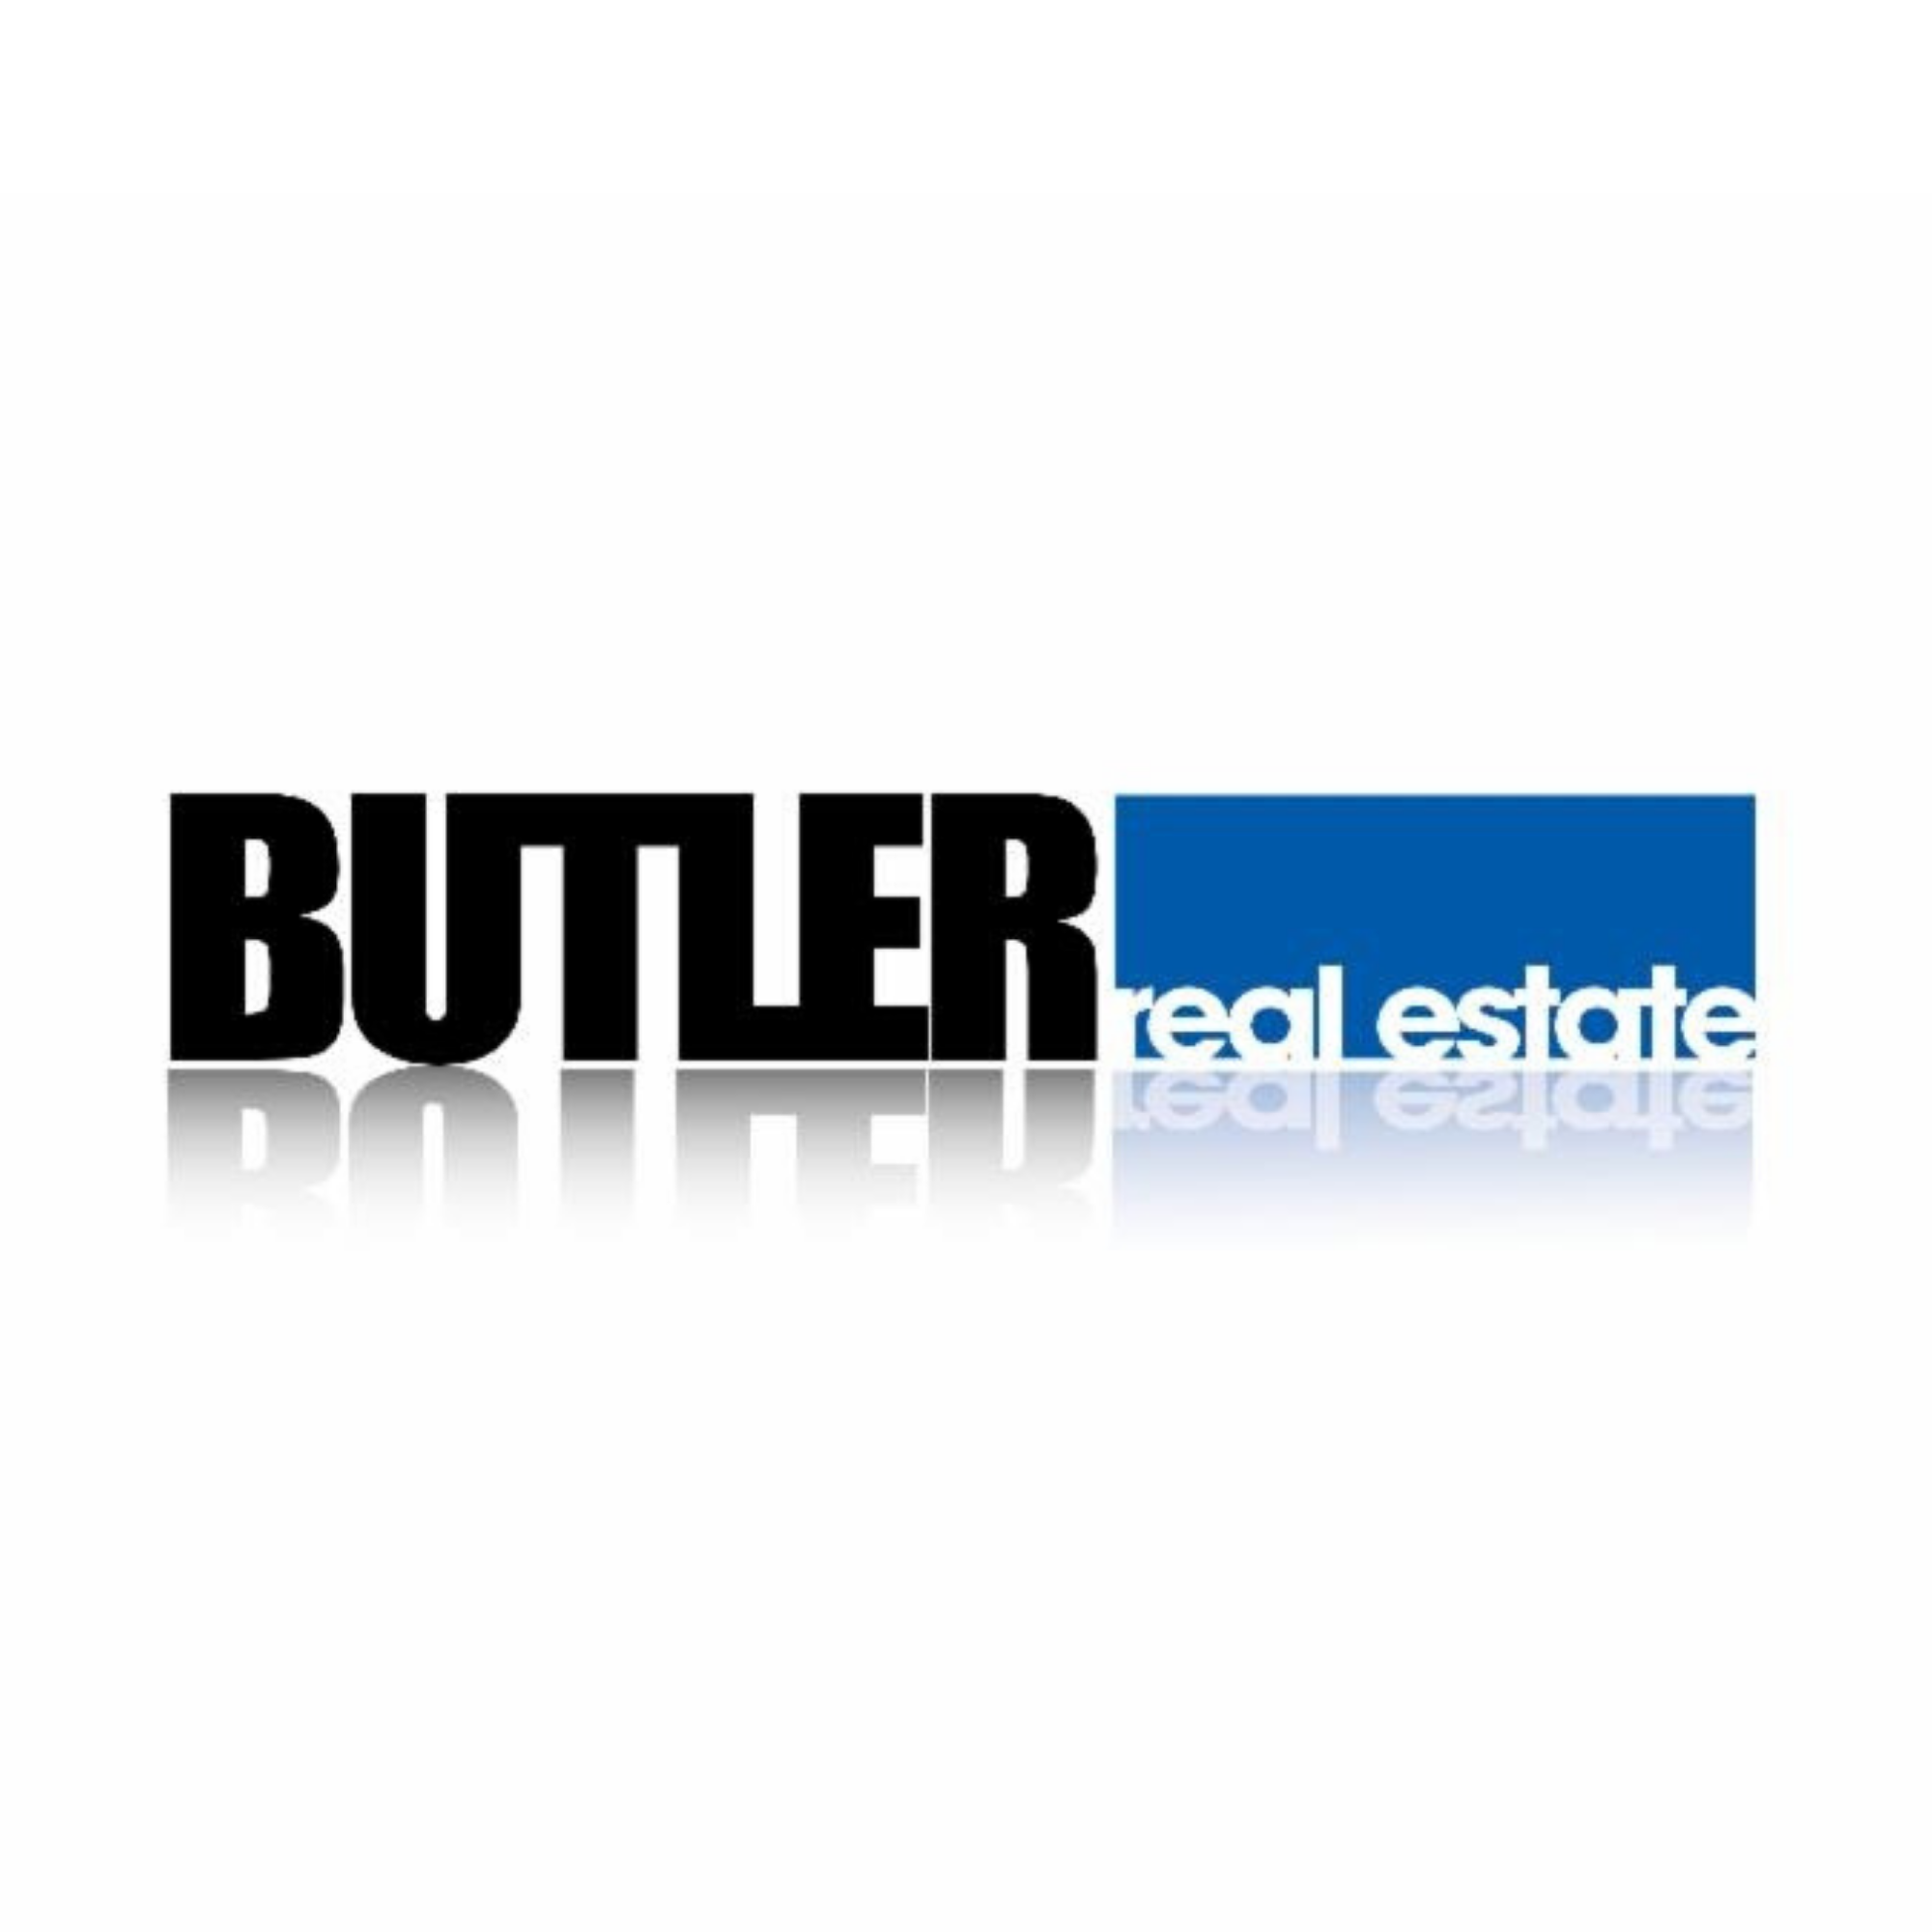 Butler Real Estate